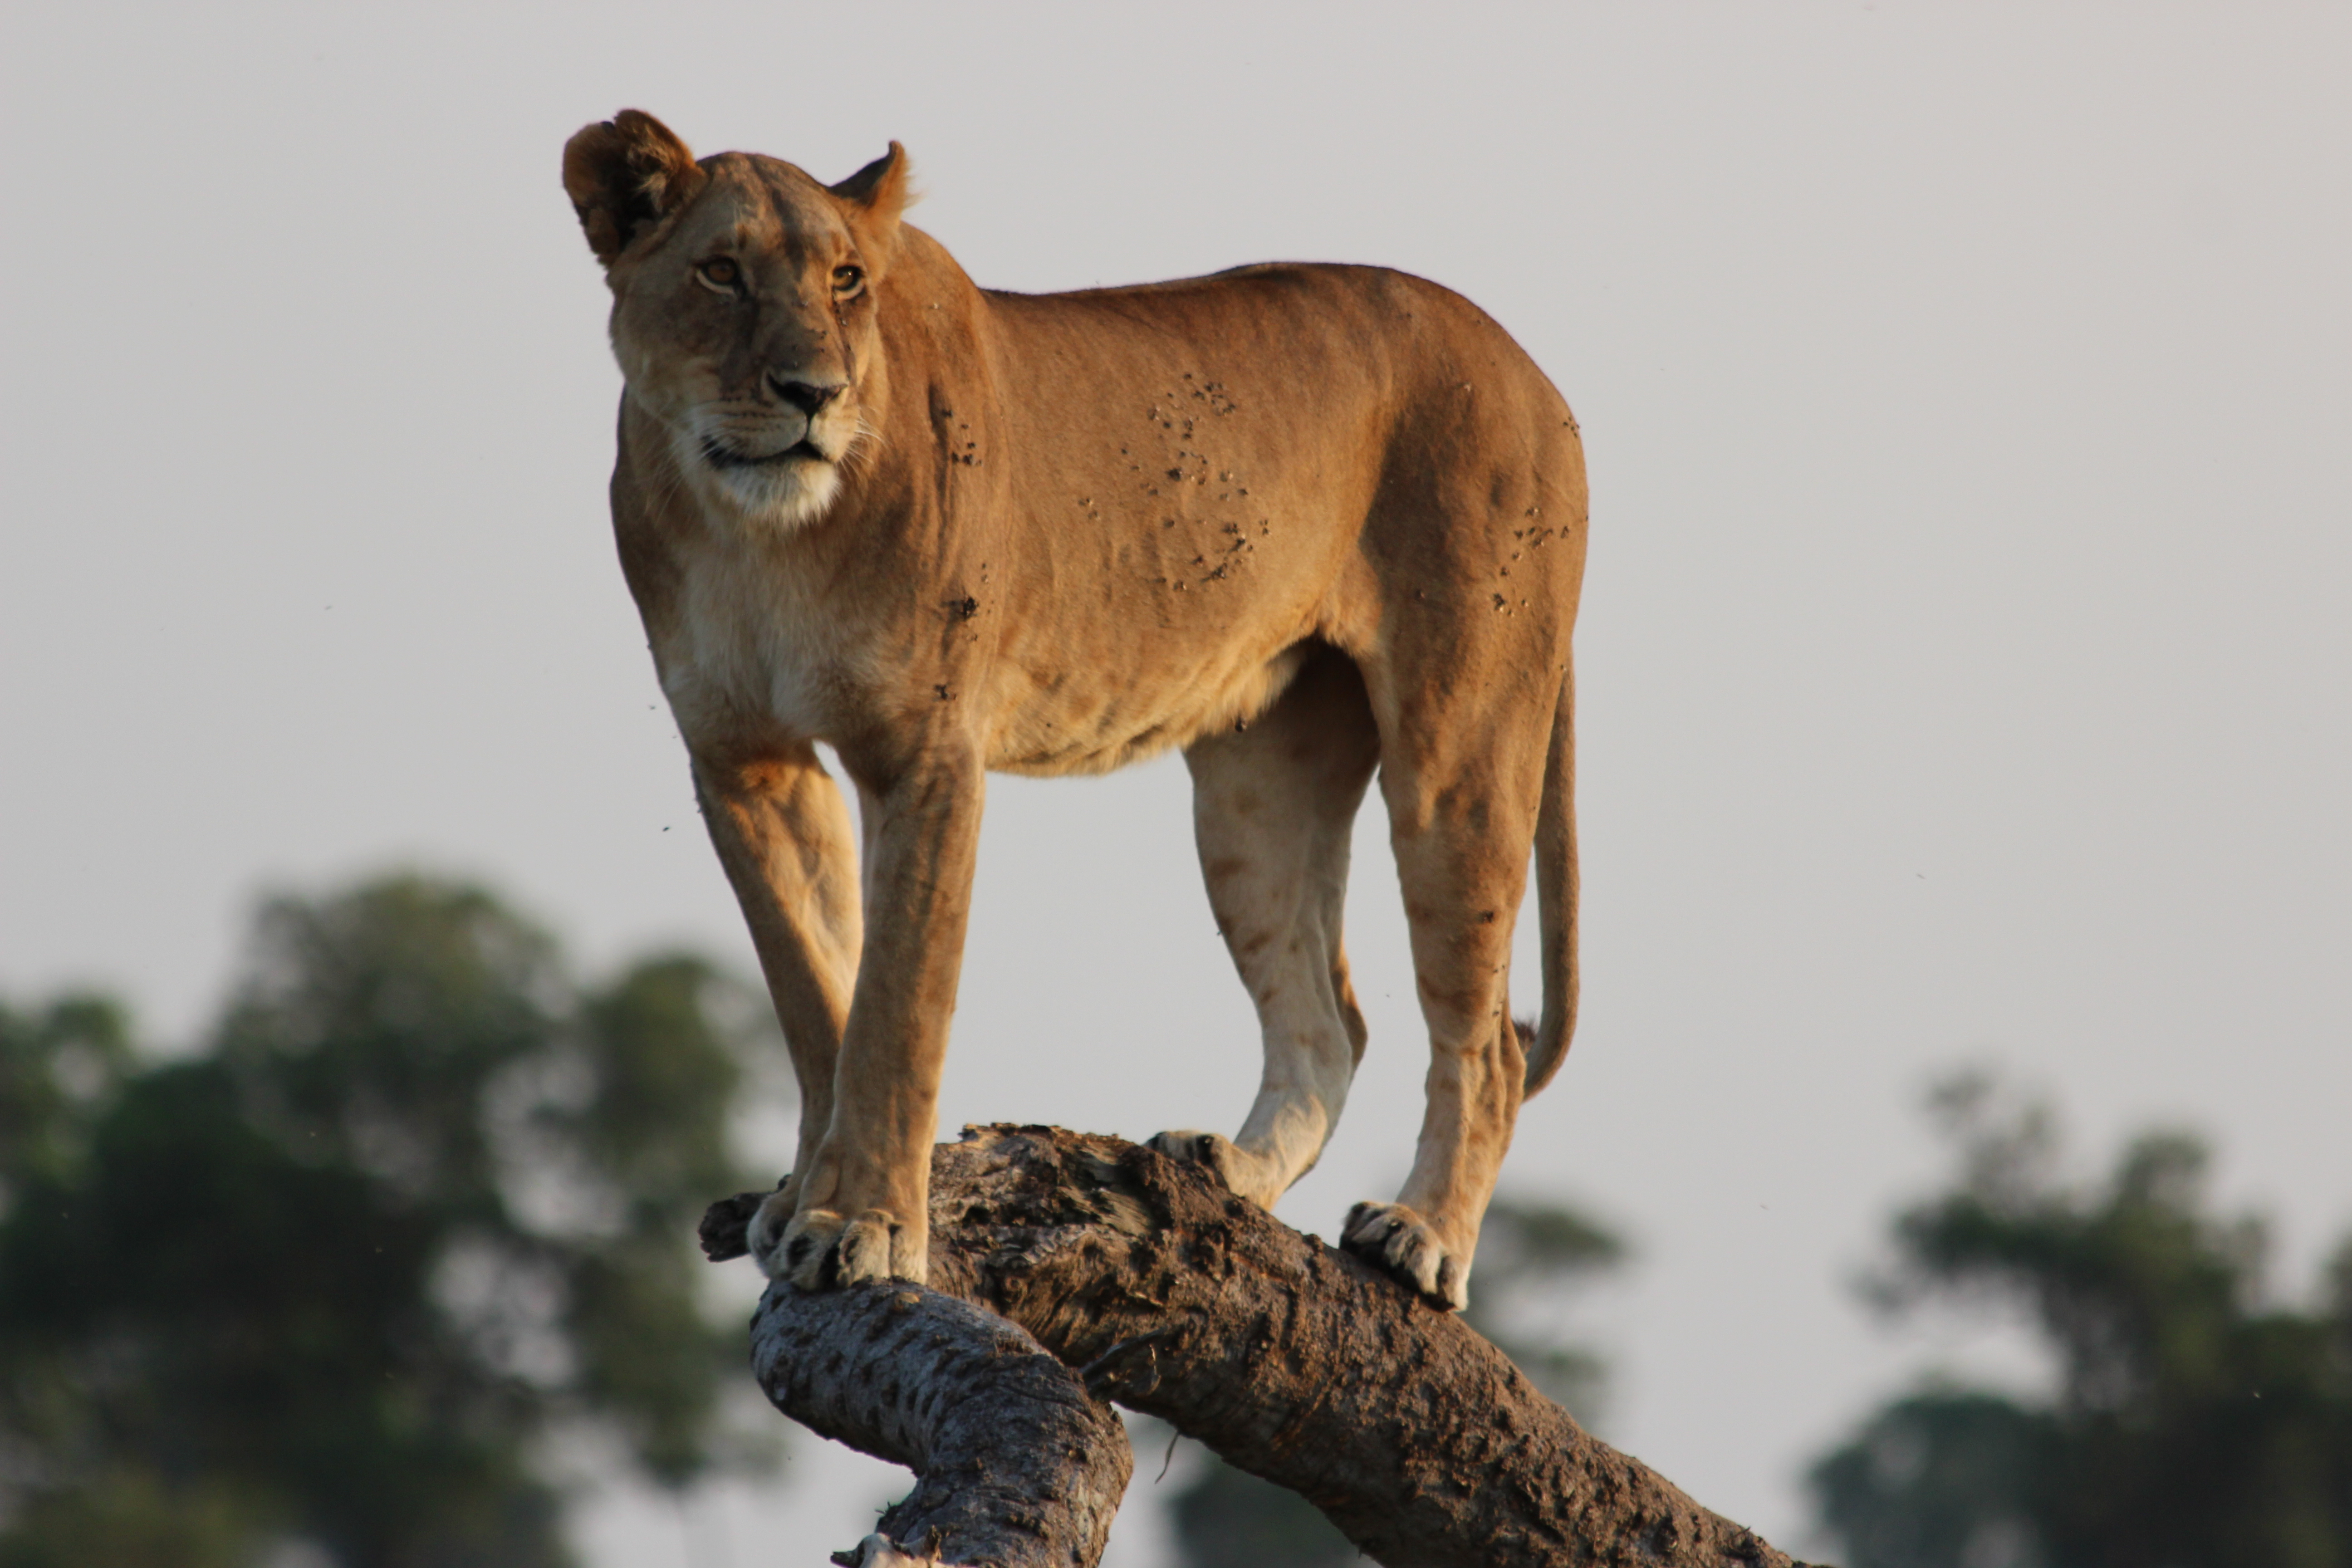 Lioness (Photo credit: David Green)